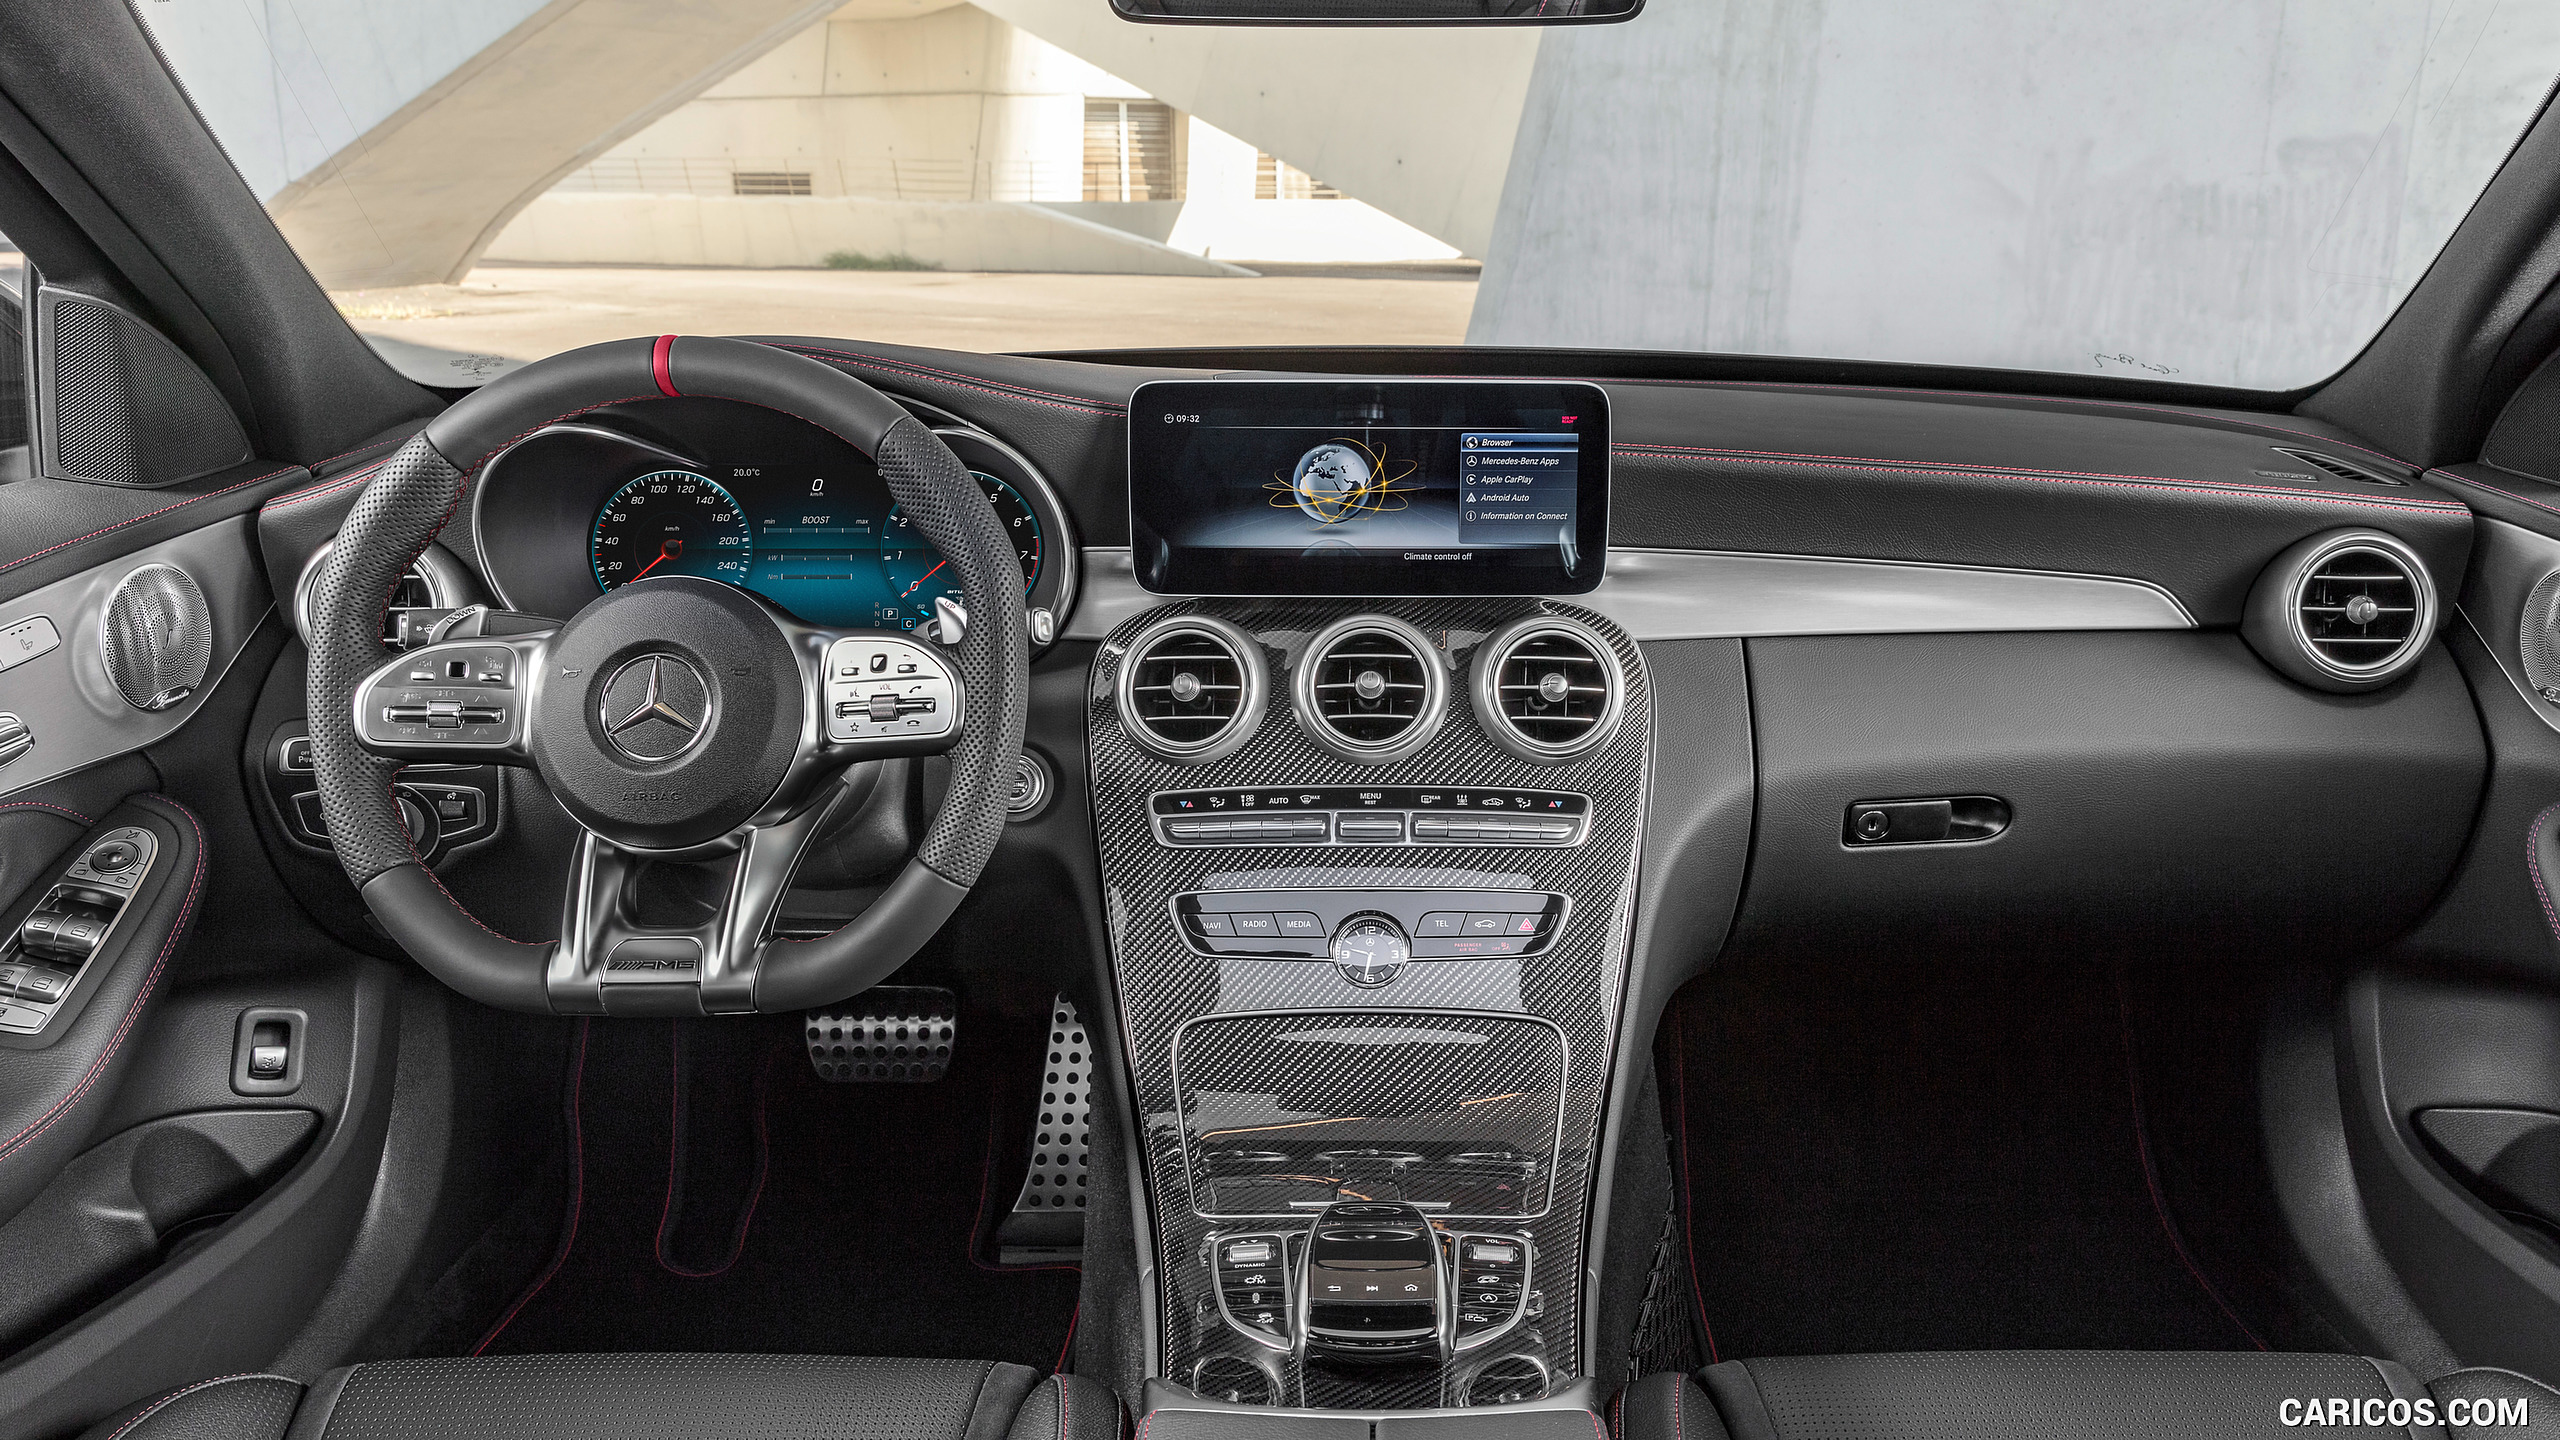 2019 Mercedes-AMG C43 4MATIC - Interior, Cockpit, #27 of 192